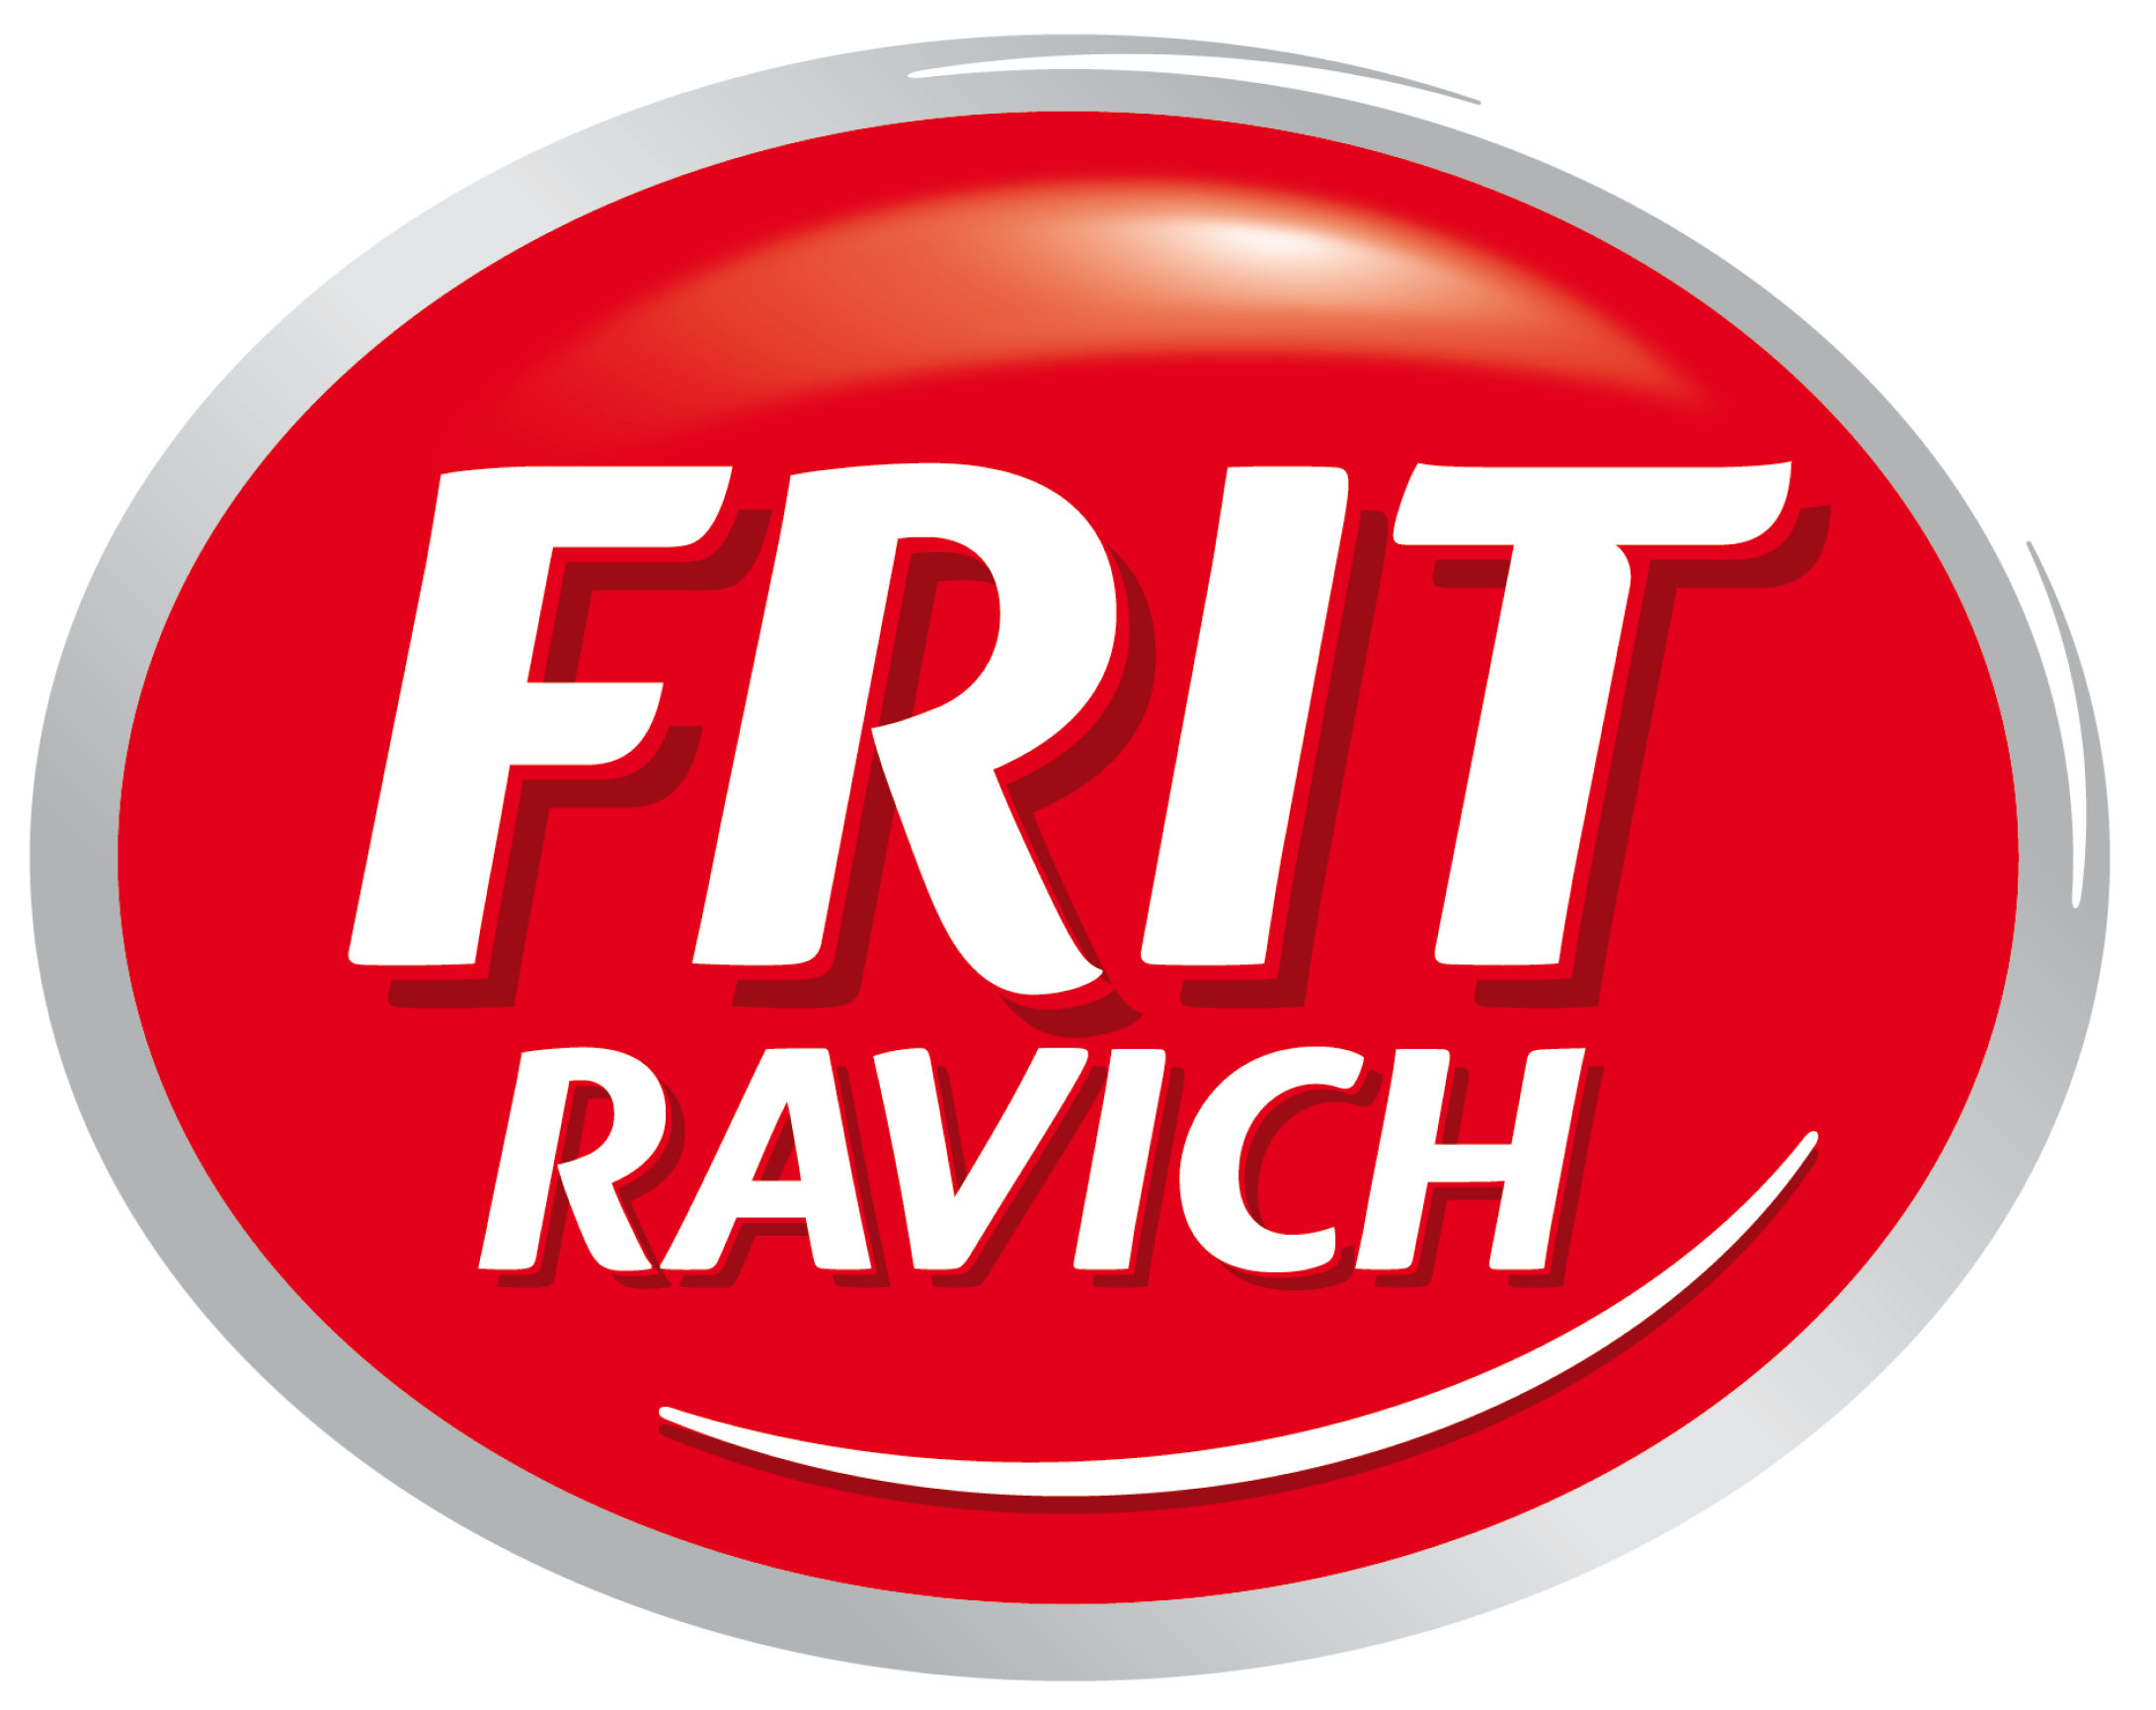 fritravich